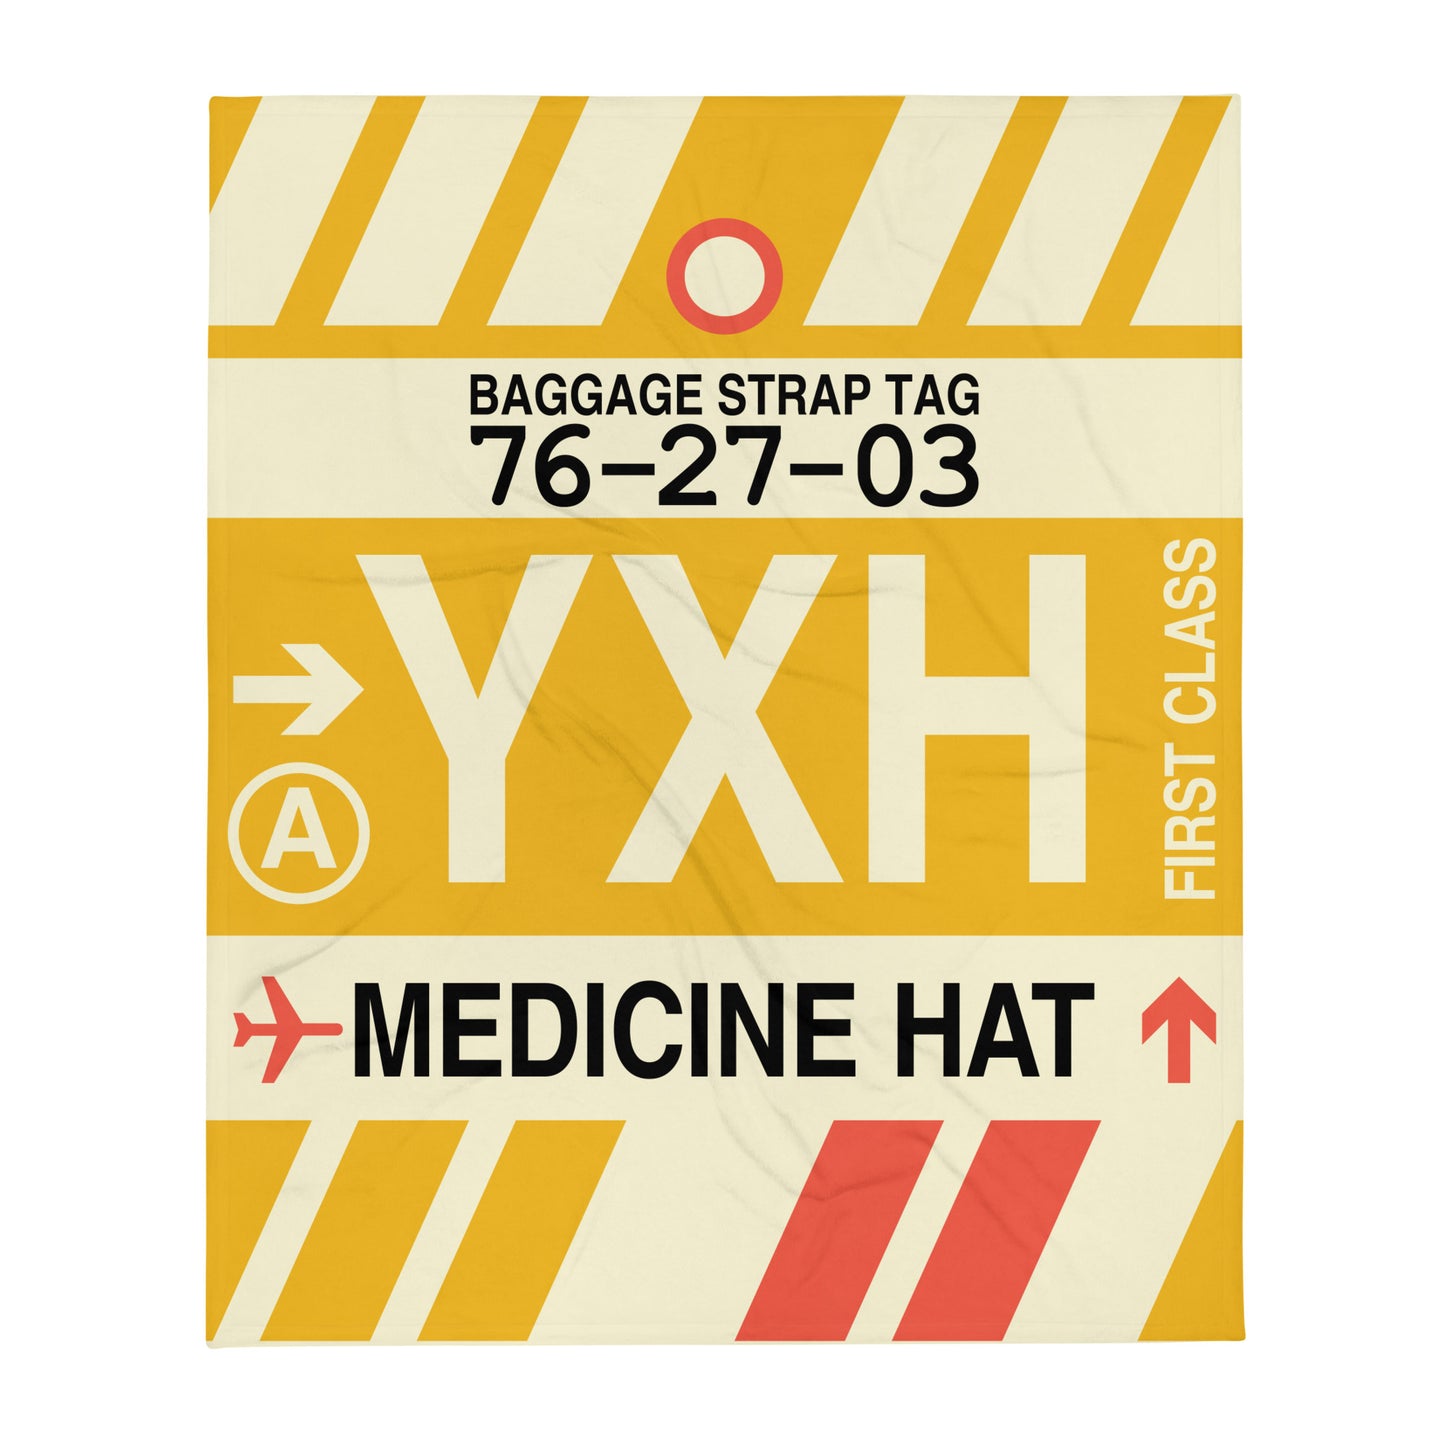 Travel Gift Throw Blanket • YXH Medicine Hat • YHM Designs - Image 01